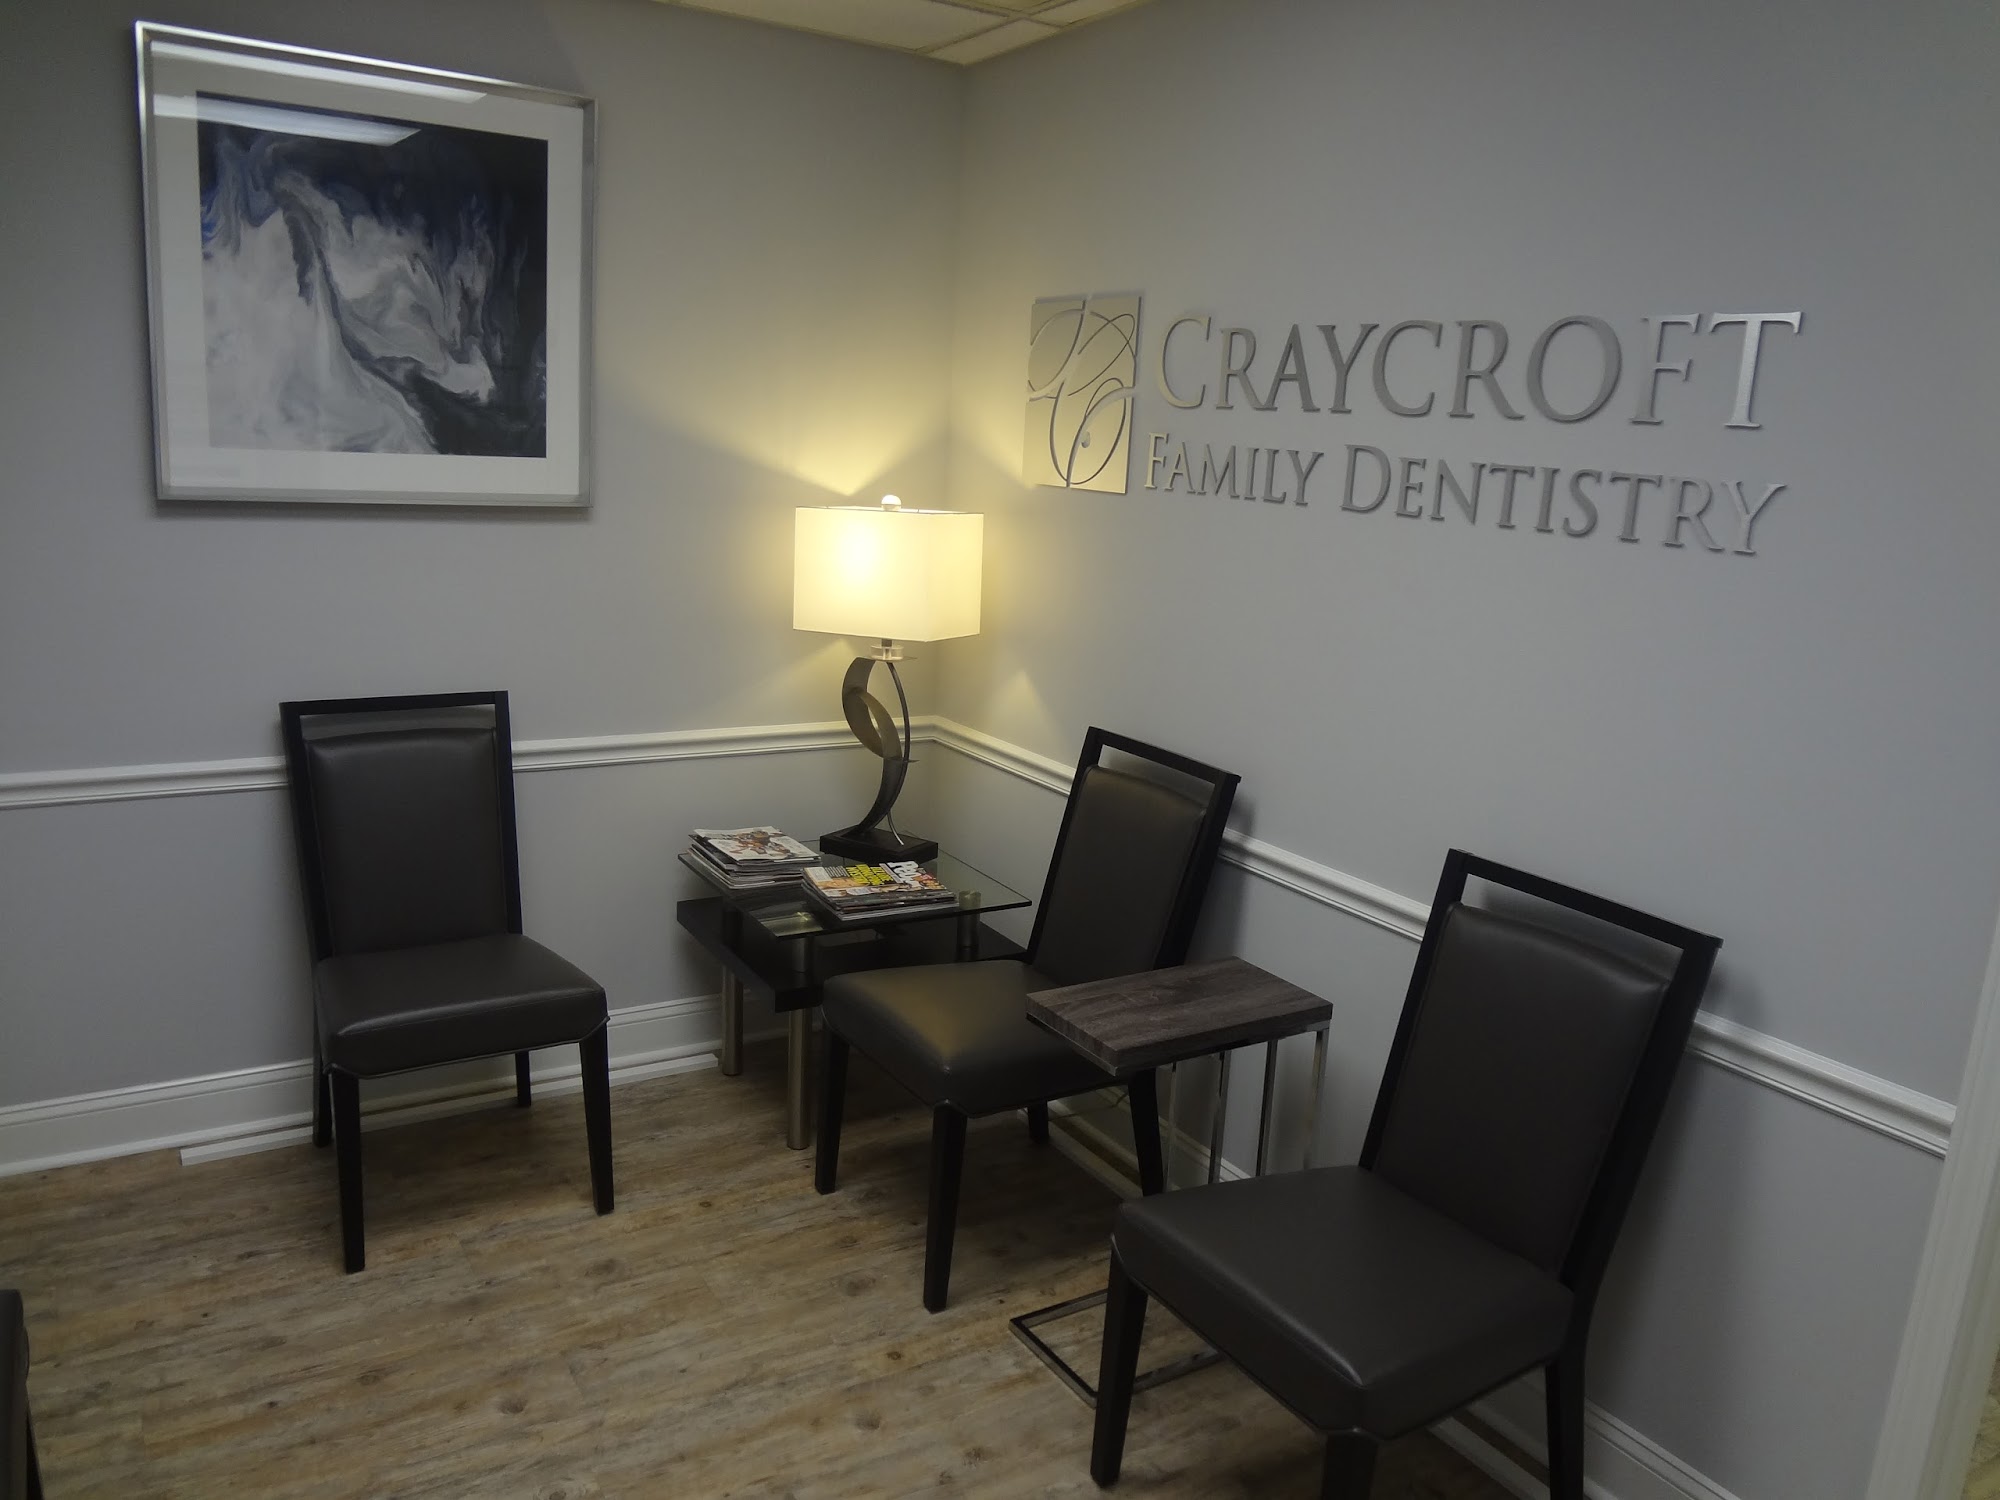 Craycroft Family Dentistry: Dr. Andrew Craycroft